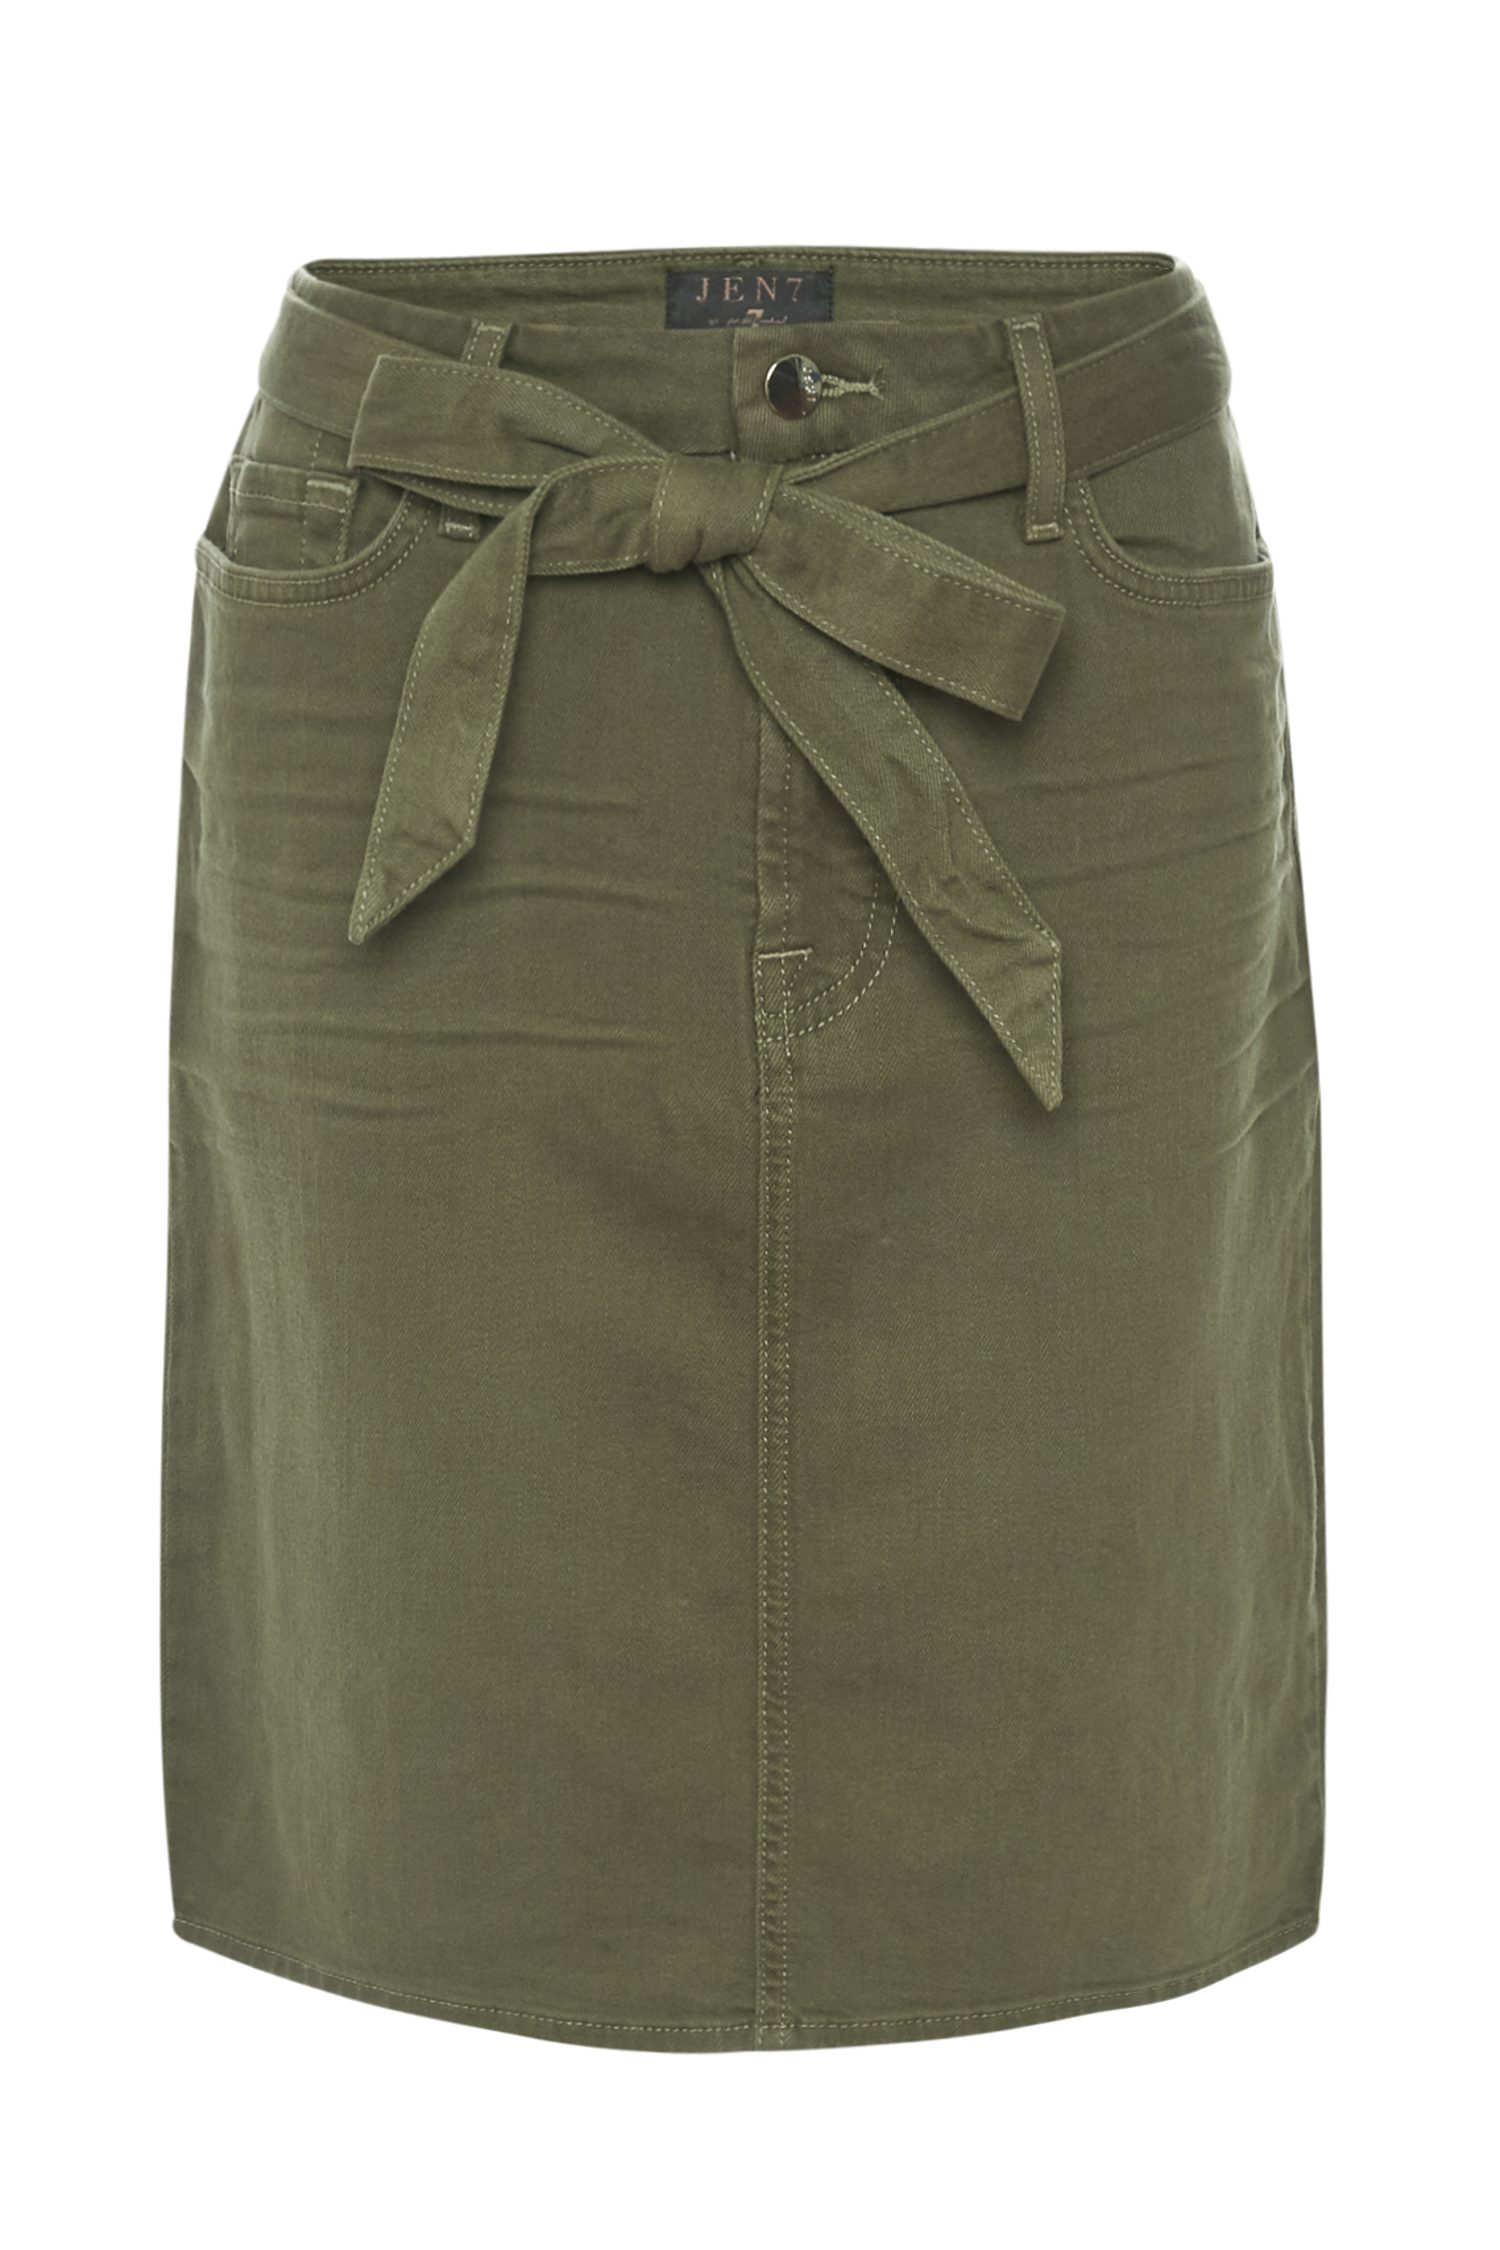 Jen 7 Pencil Skirt with Waist Tie in Olive 0 | DAILYLOOK